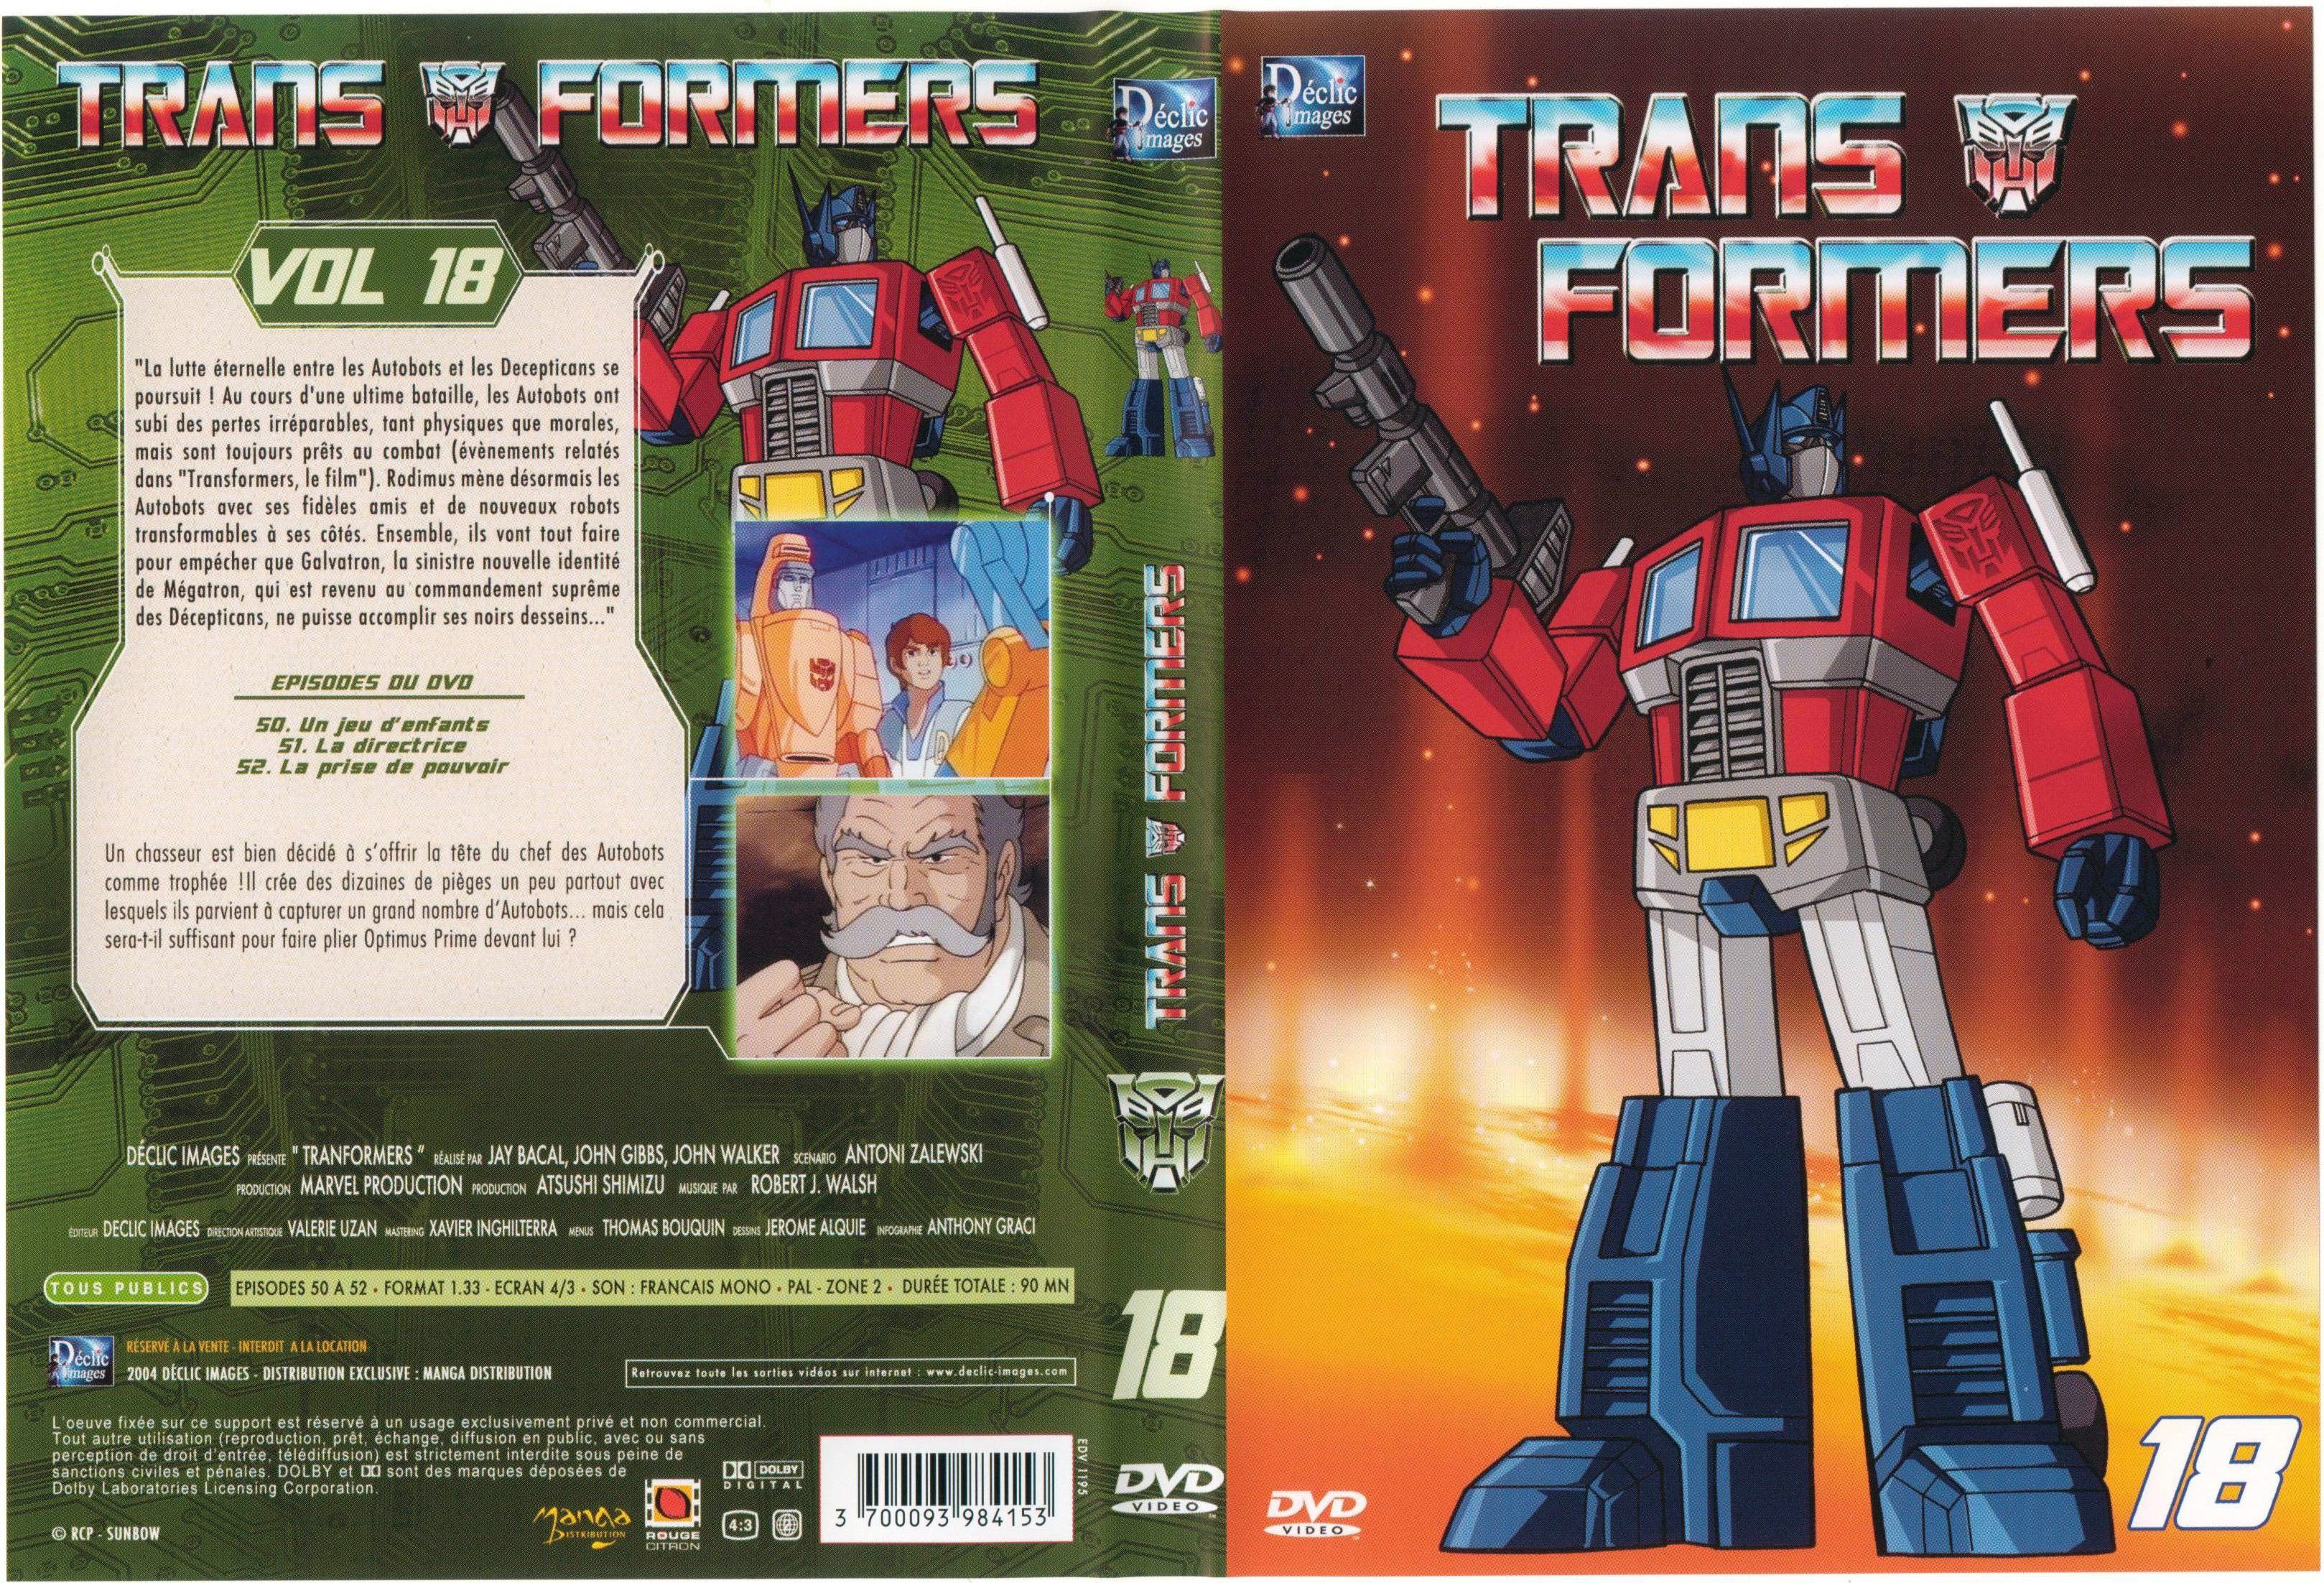 Jaquette DVD Transformers vol 18